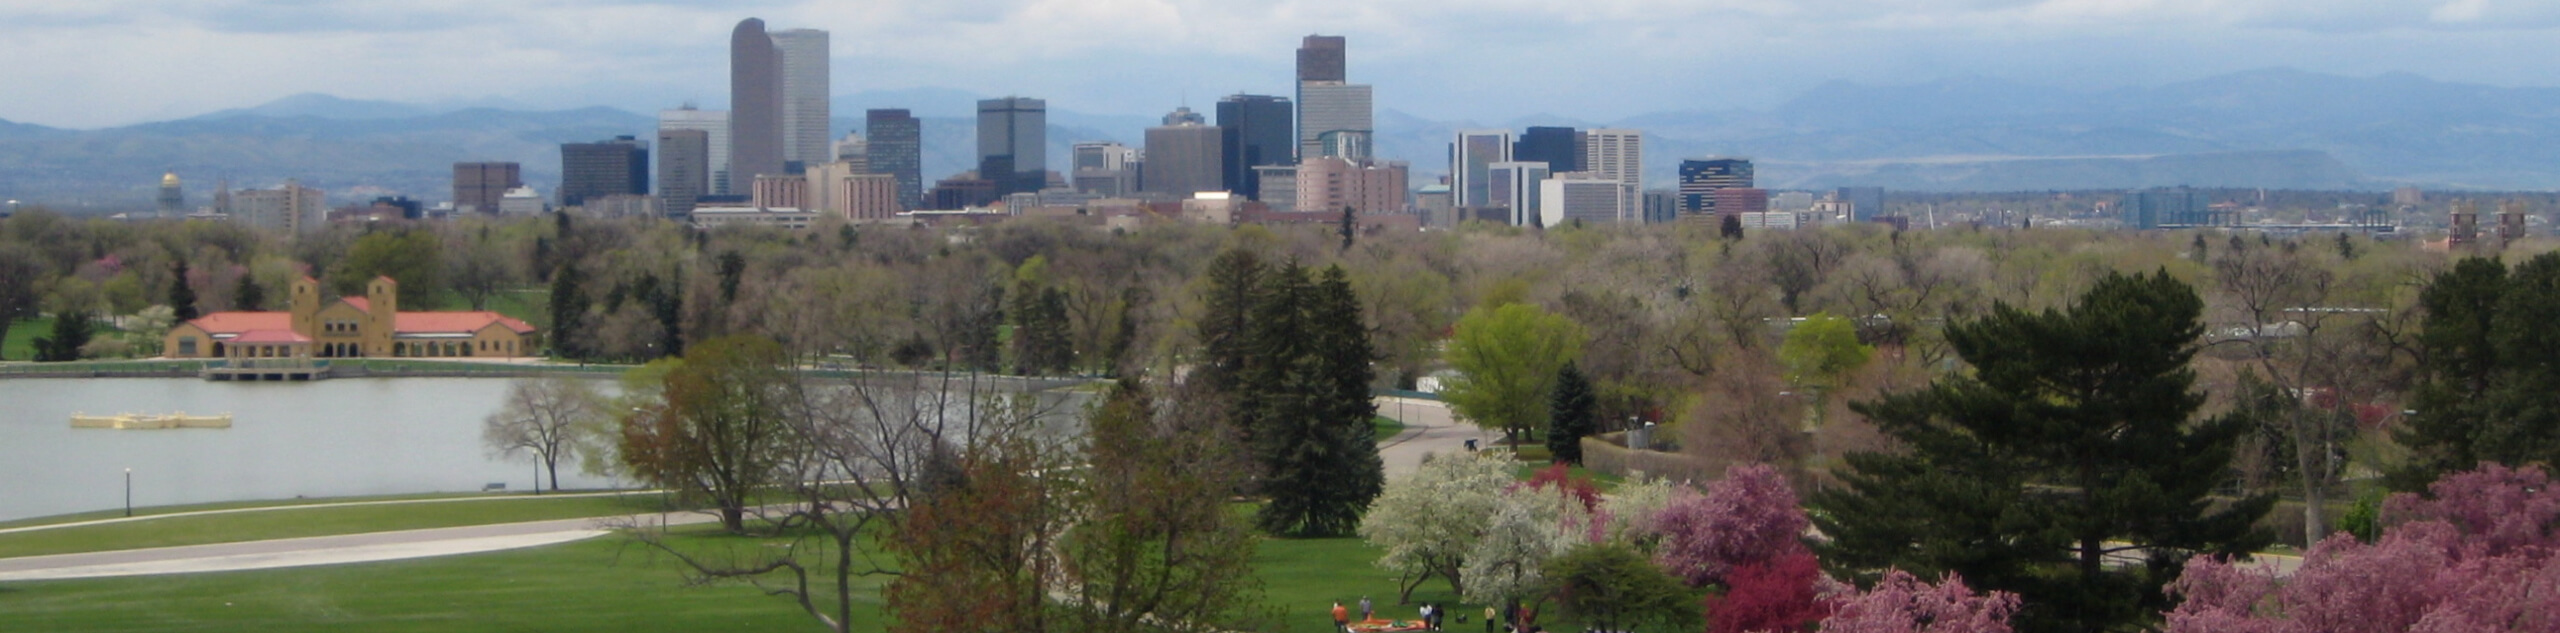 Denver City Park Loop